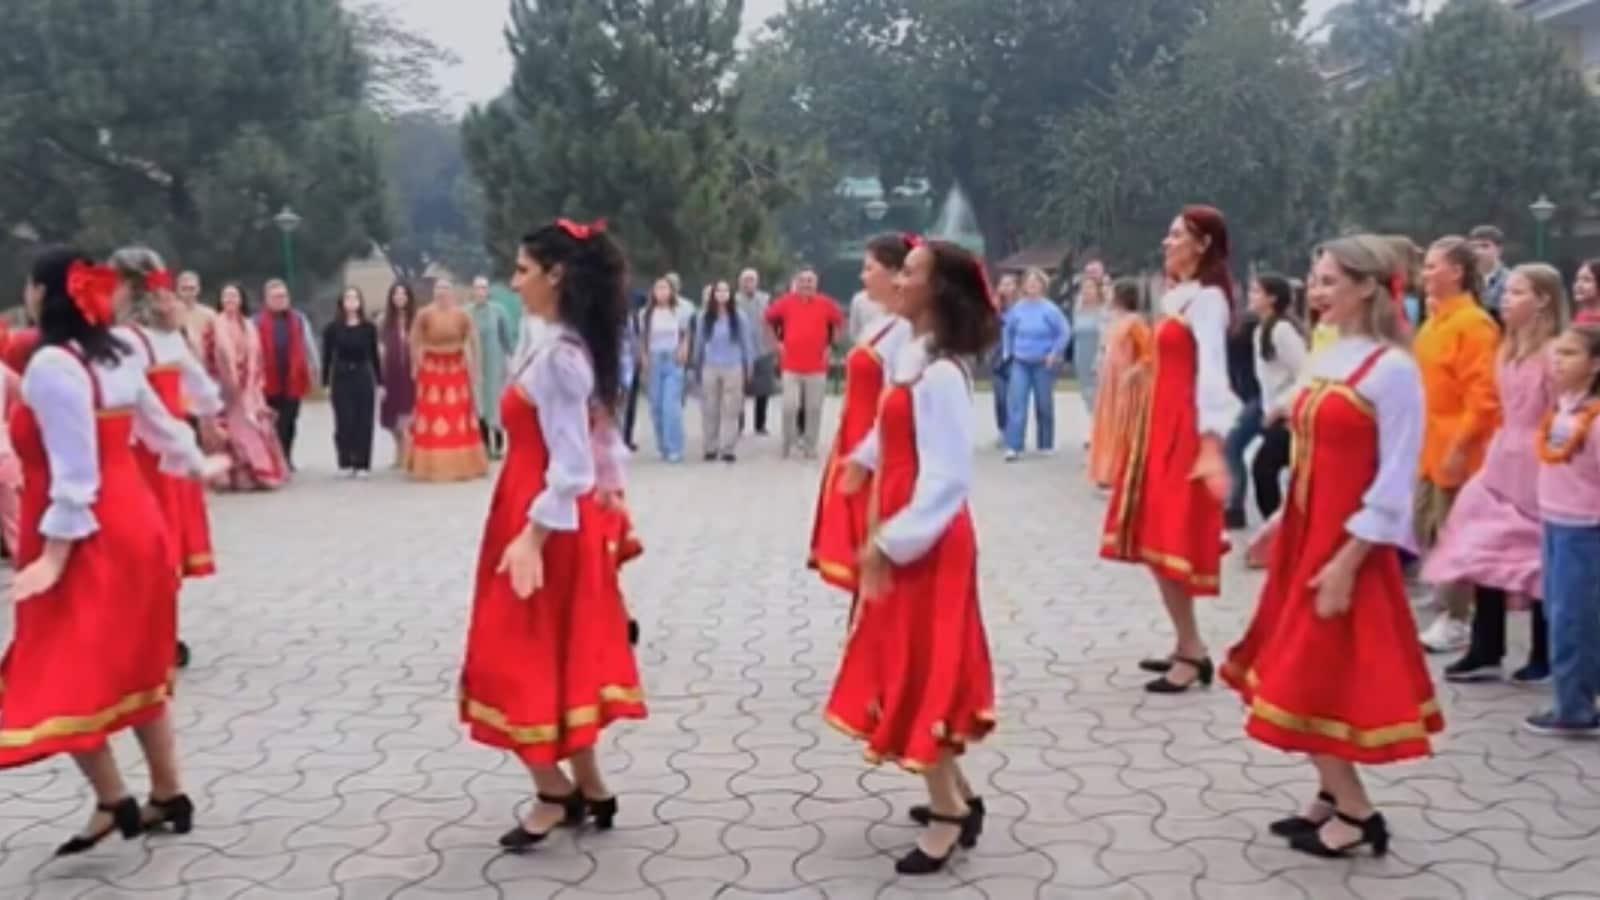 Russian Embassy celebrates Republic Day with dance to Main Nikla Gaddi Leke